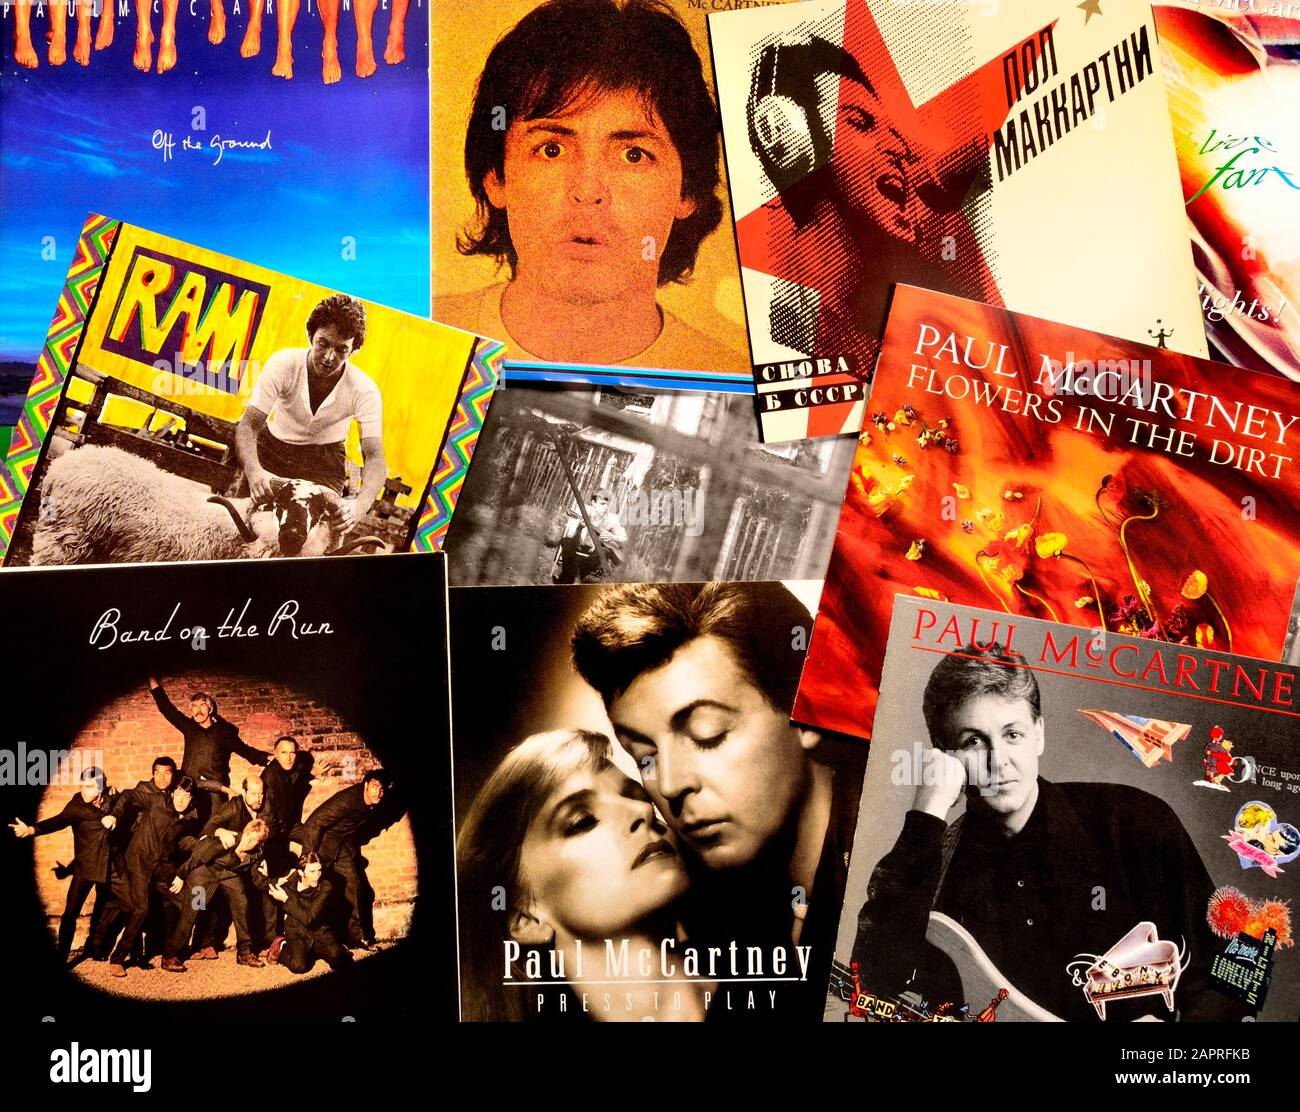 Paul McCartney CD albums Stock Photo